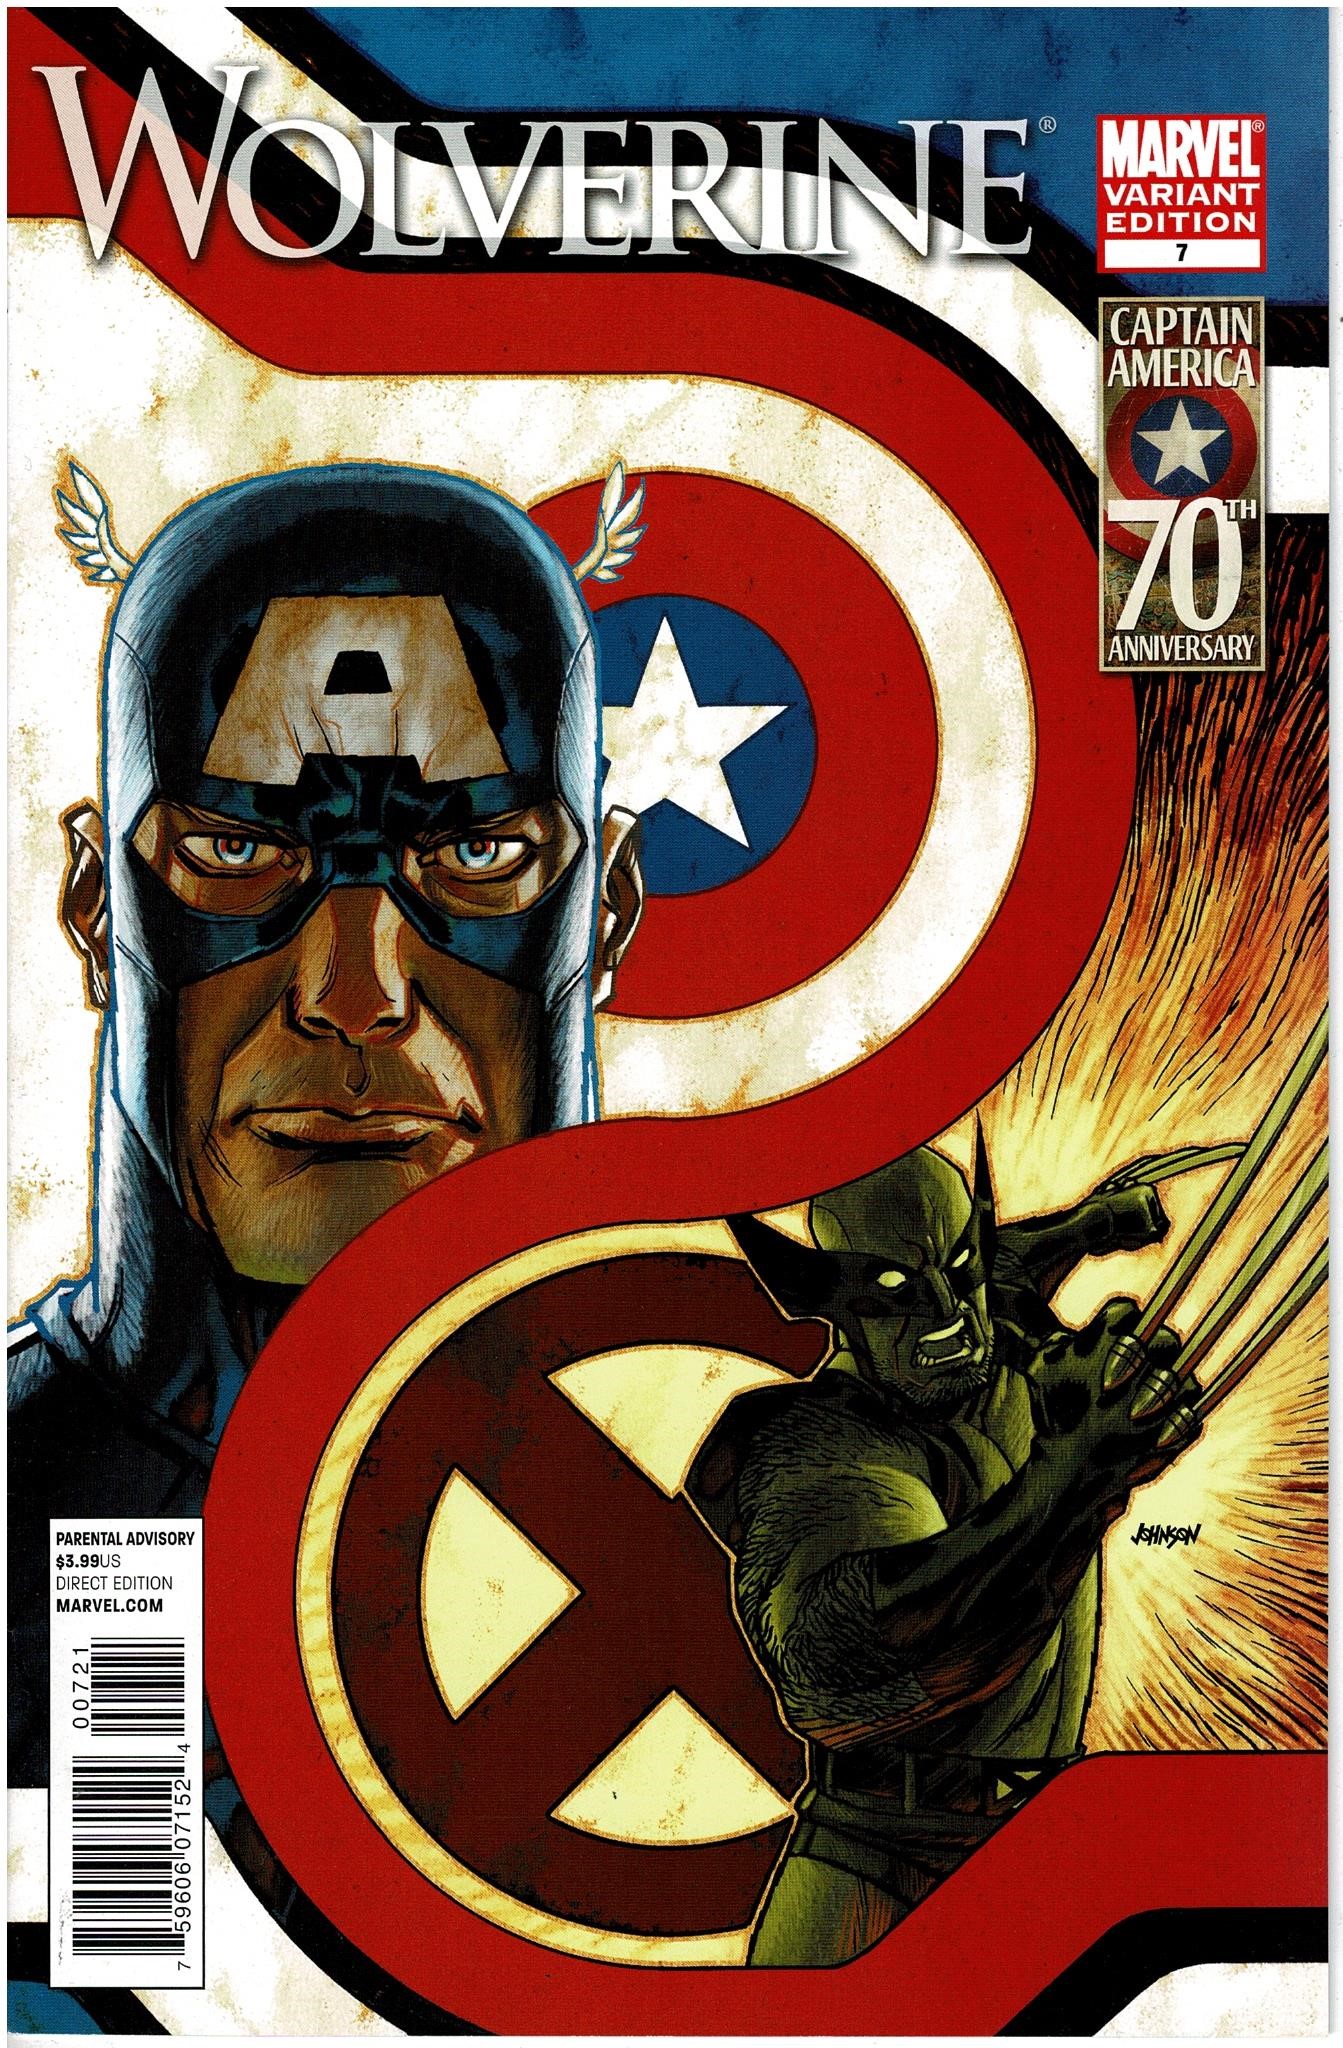 Wolverine #7 (Captain America 70th Anniversary Variant) (2010)